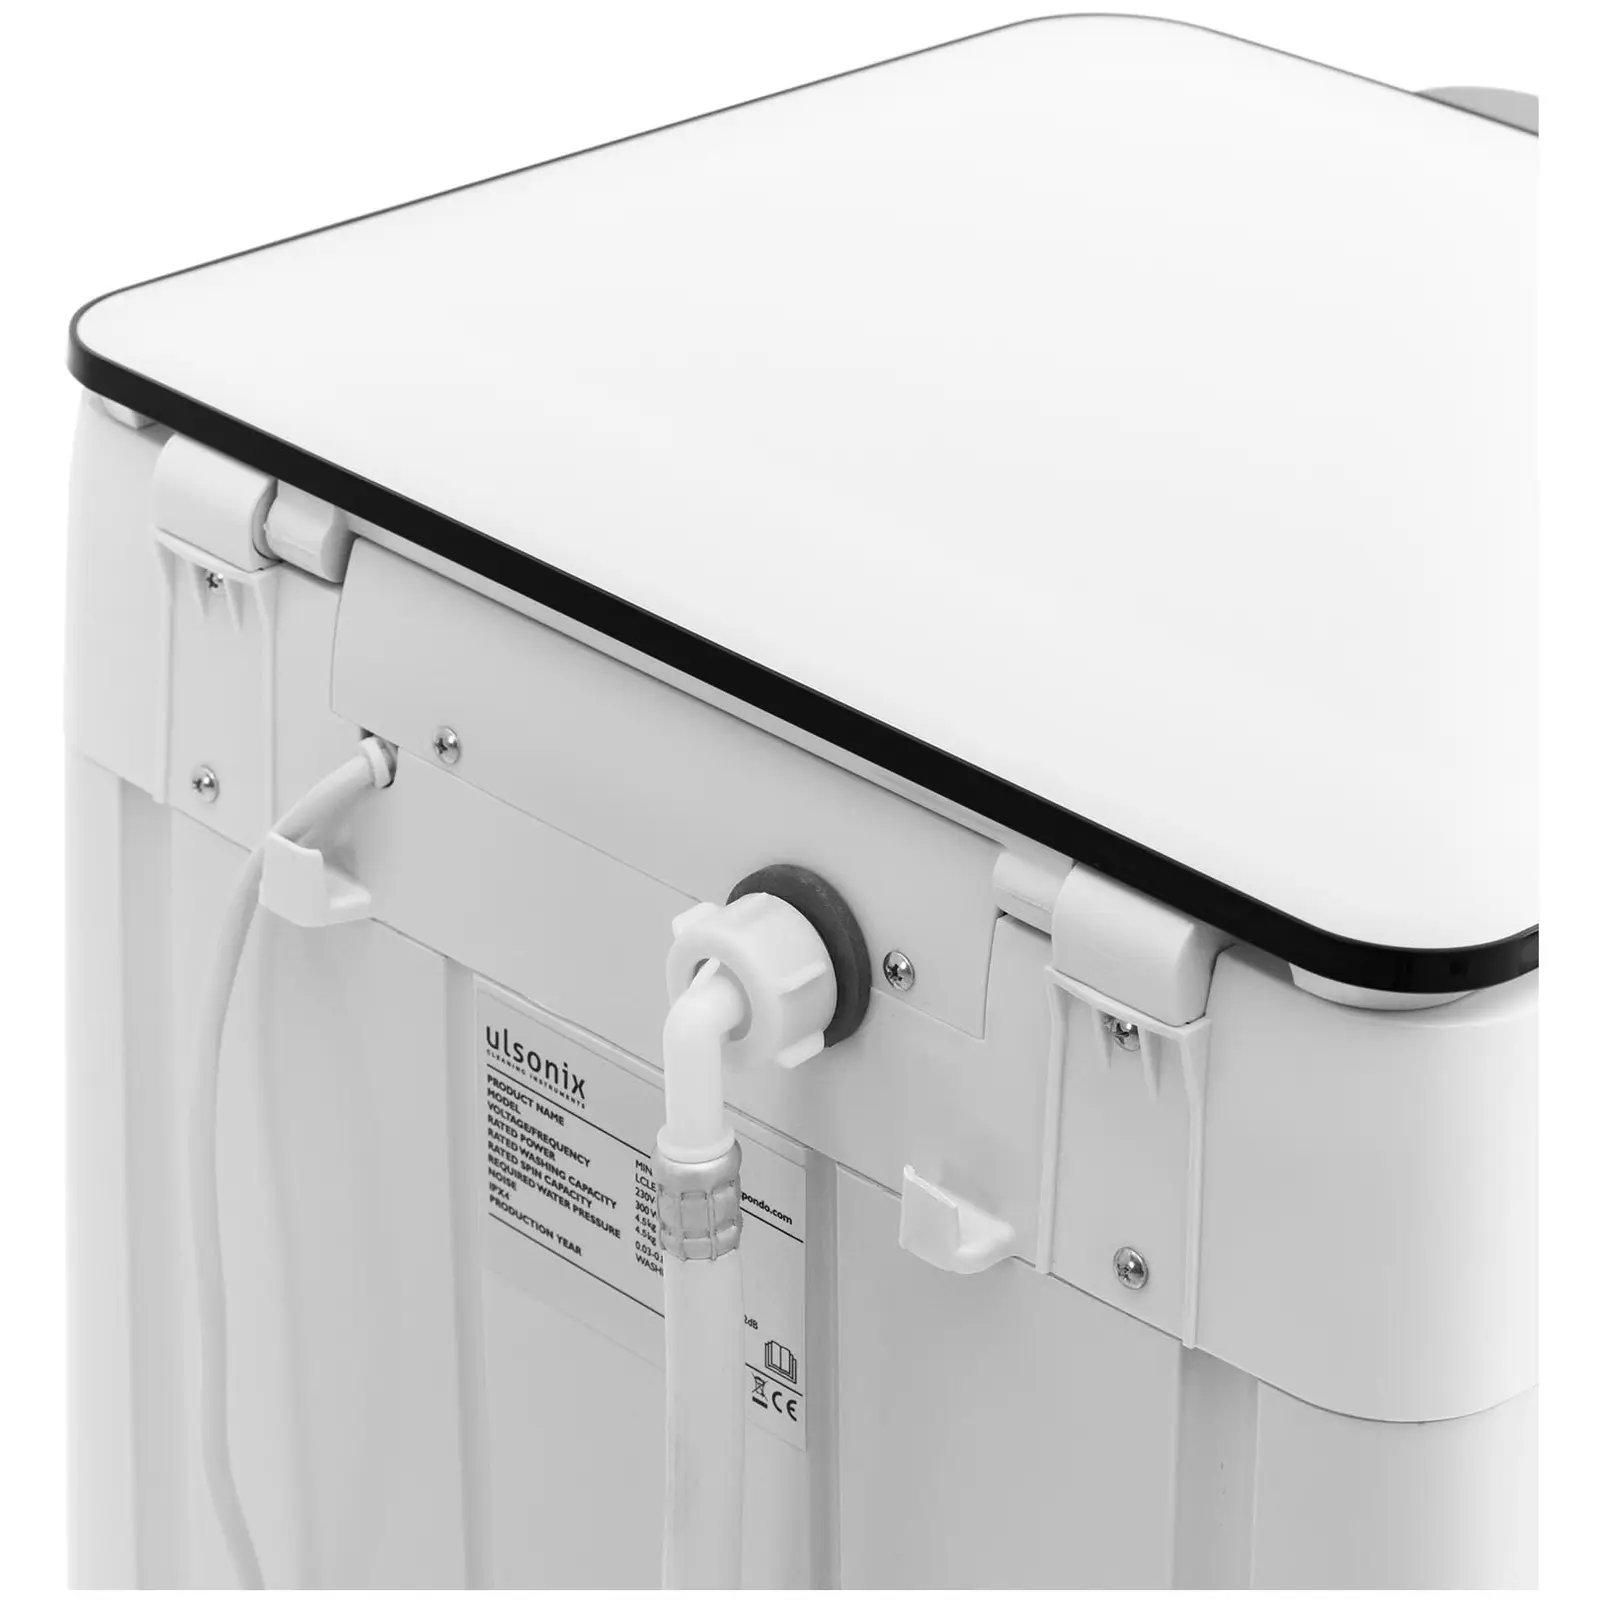 Lavadora portátil - totalmente automática - 4.5 kg - 300 W